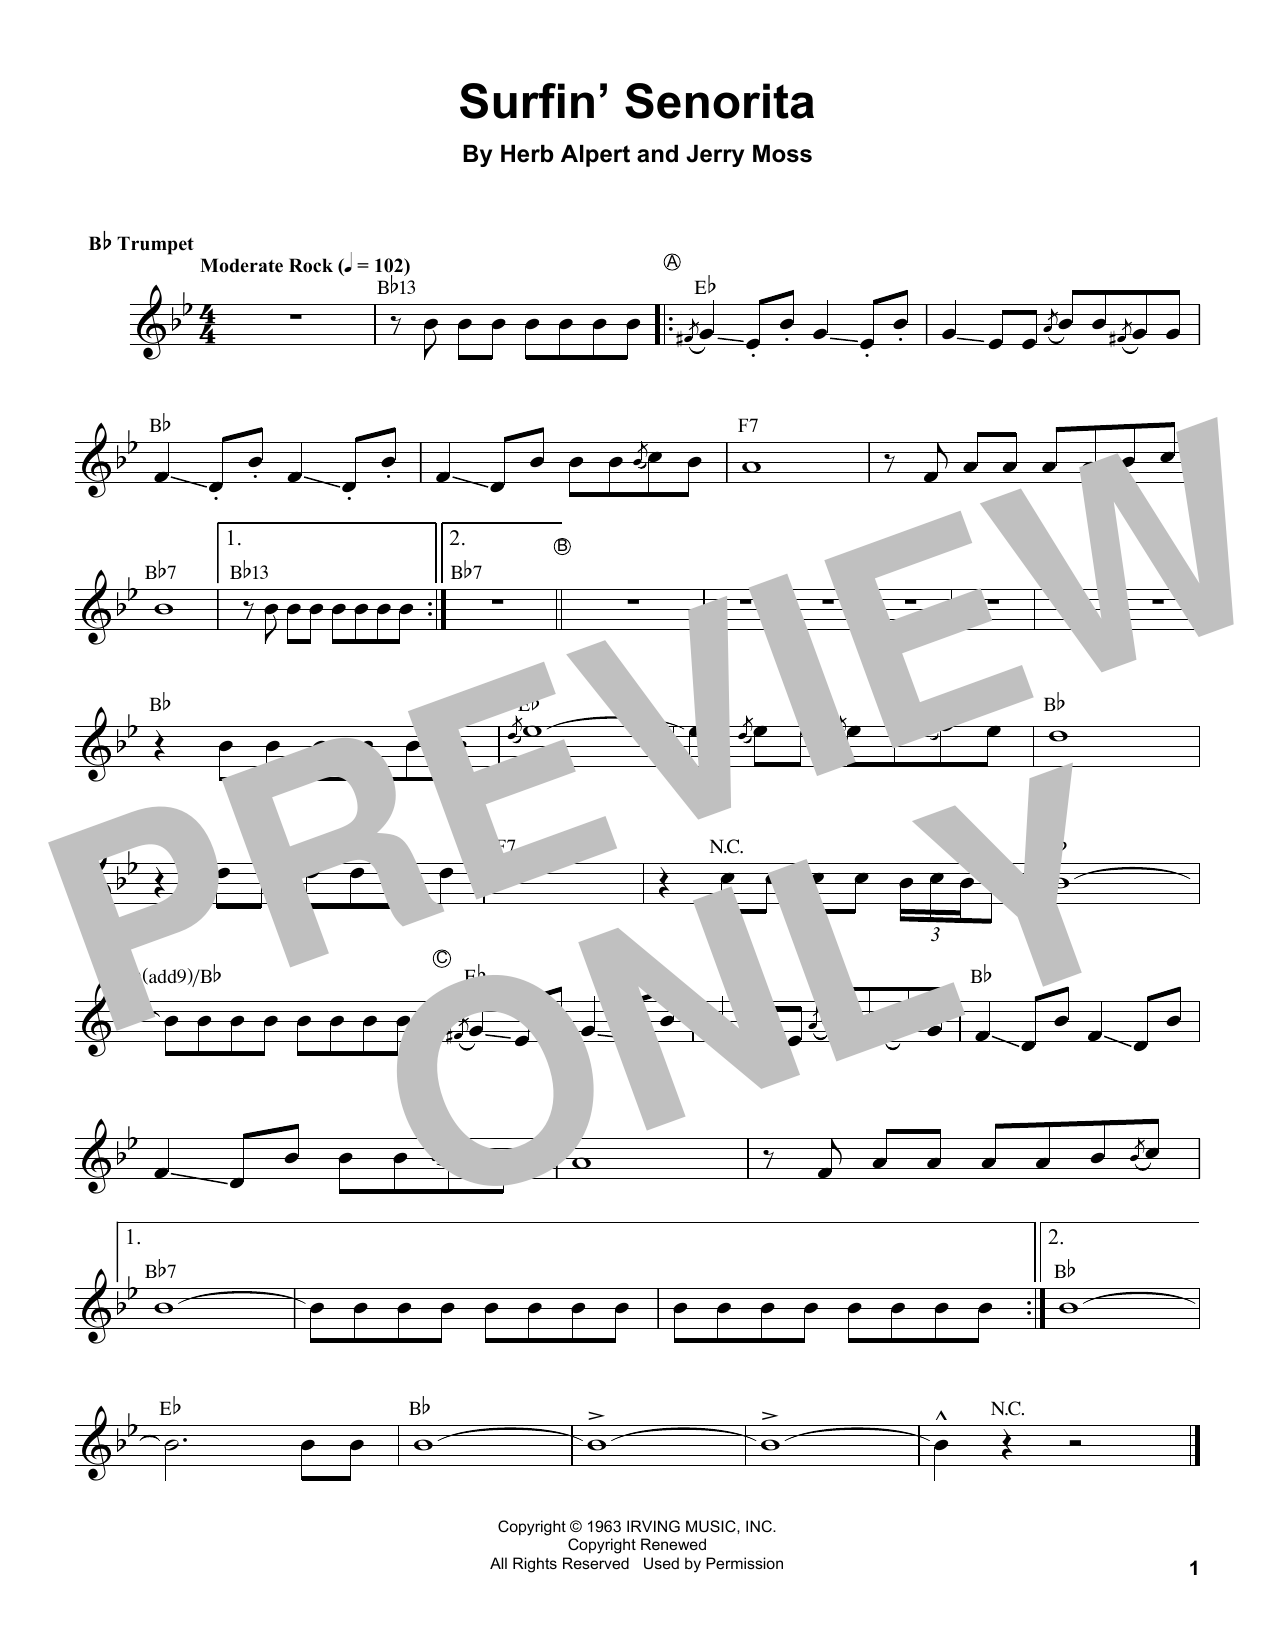 Herb Alpert Surfin' Señorita Sheet Music Notes & Chords for Trumpet Transcription - Download or Print PDF